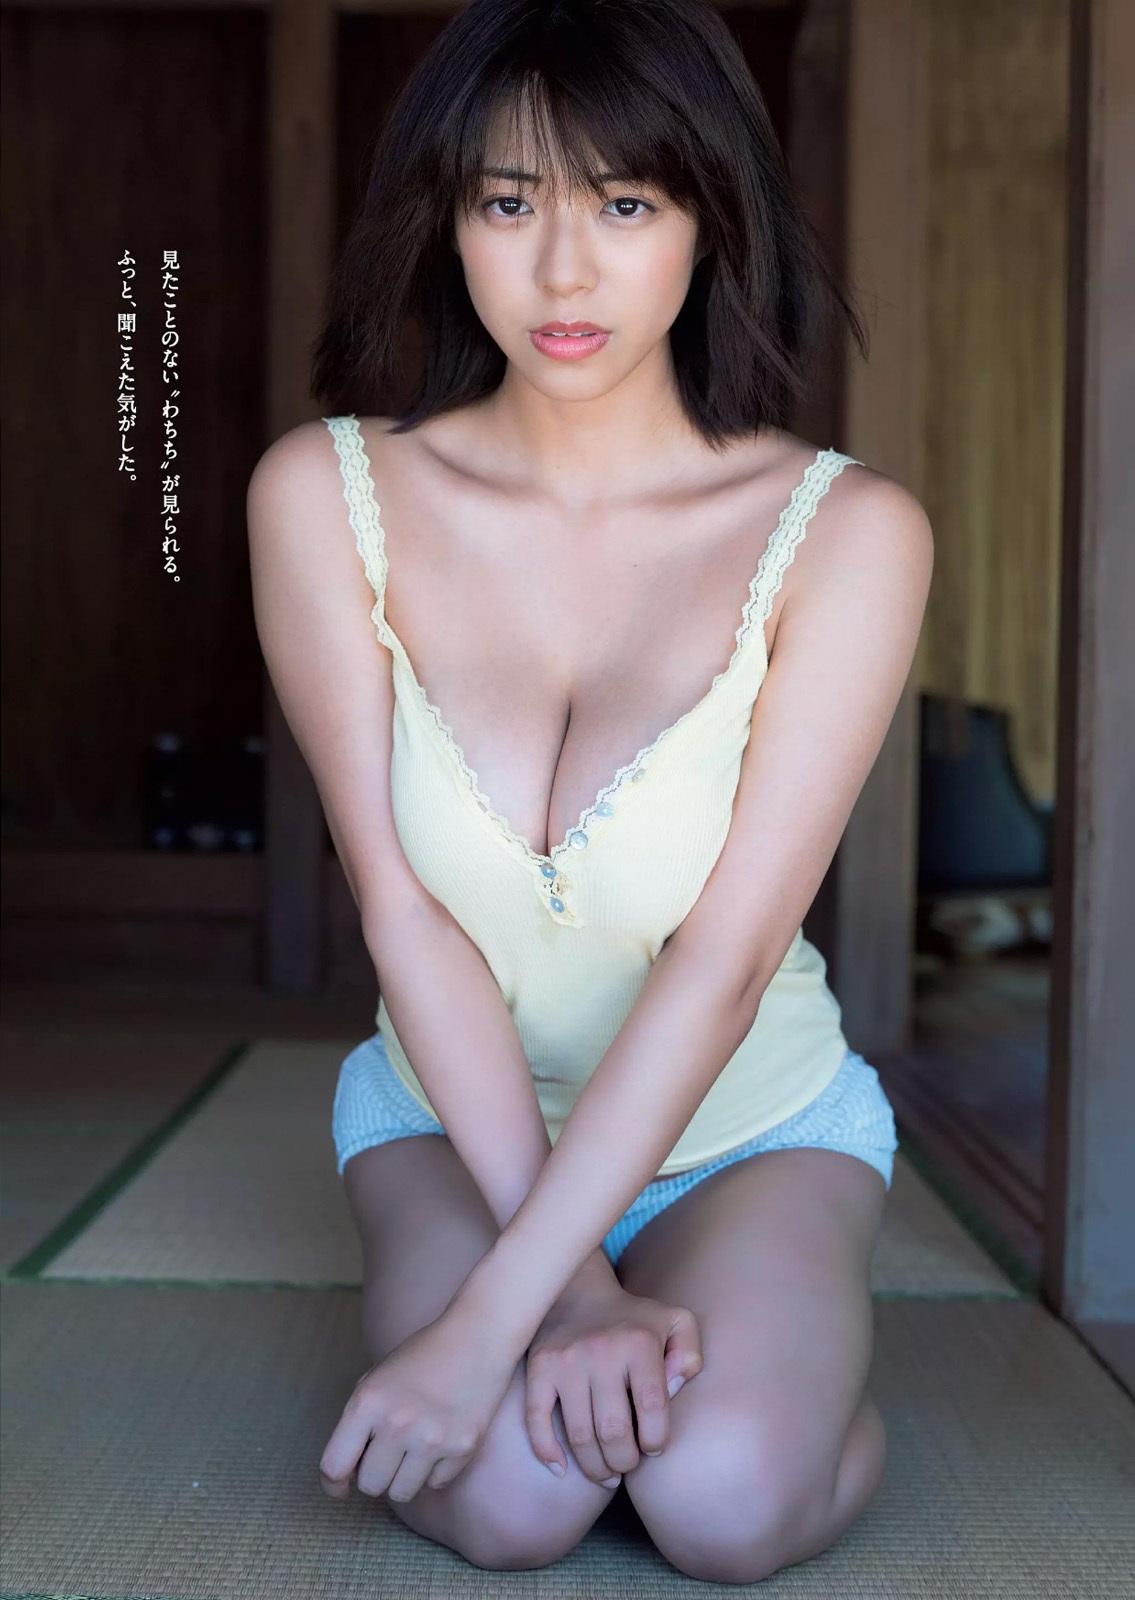 Minami Wachi: Last post for her older magazine spreads. 